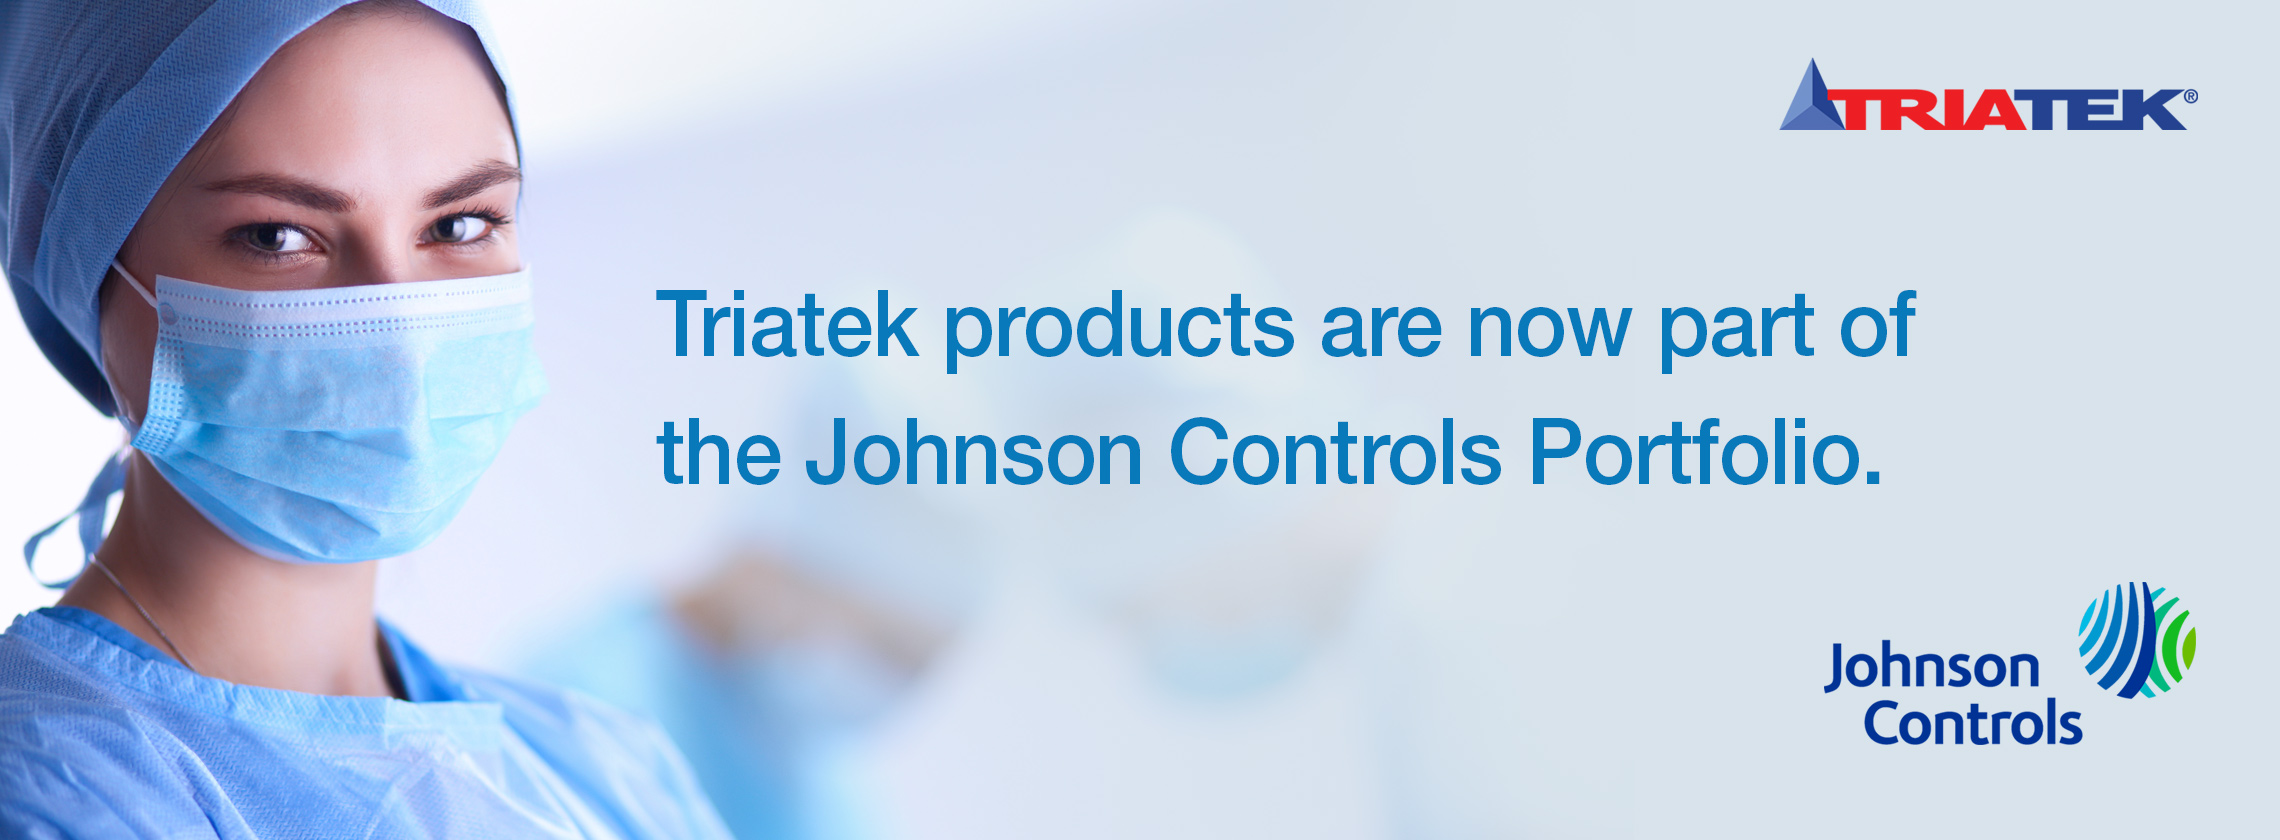 Triatek products are now part of the Johnson Controls Portfolio